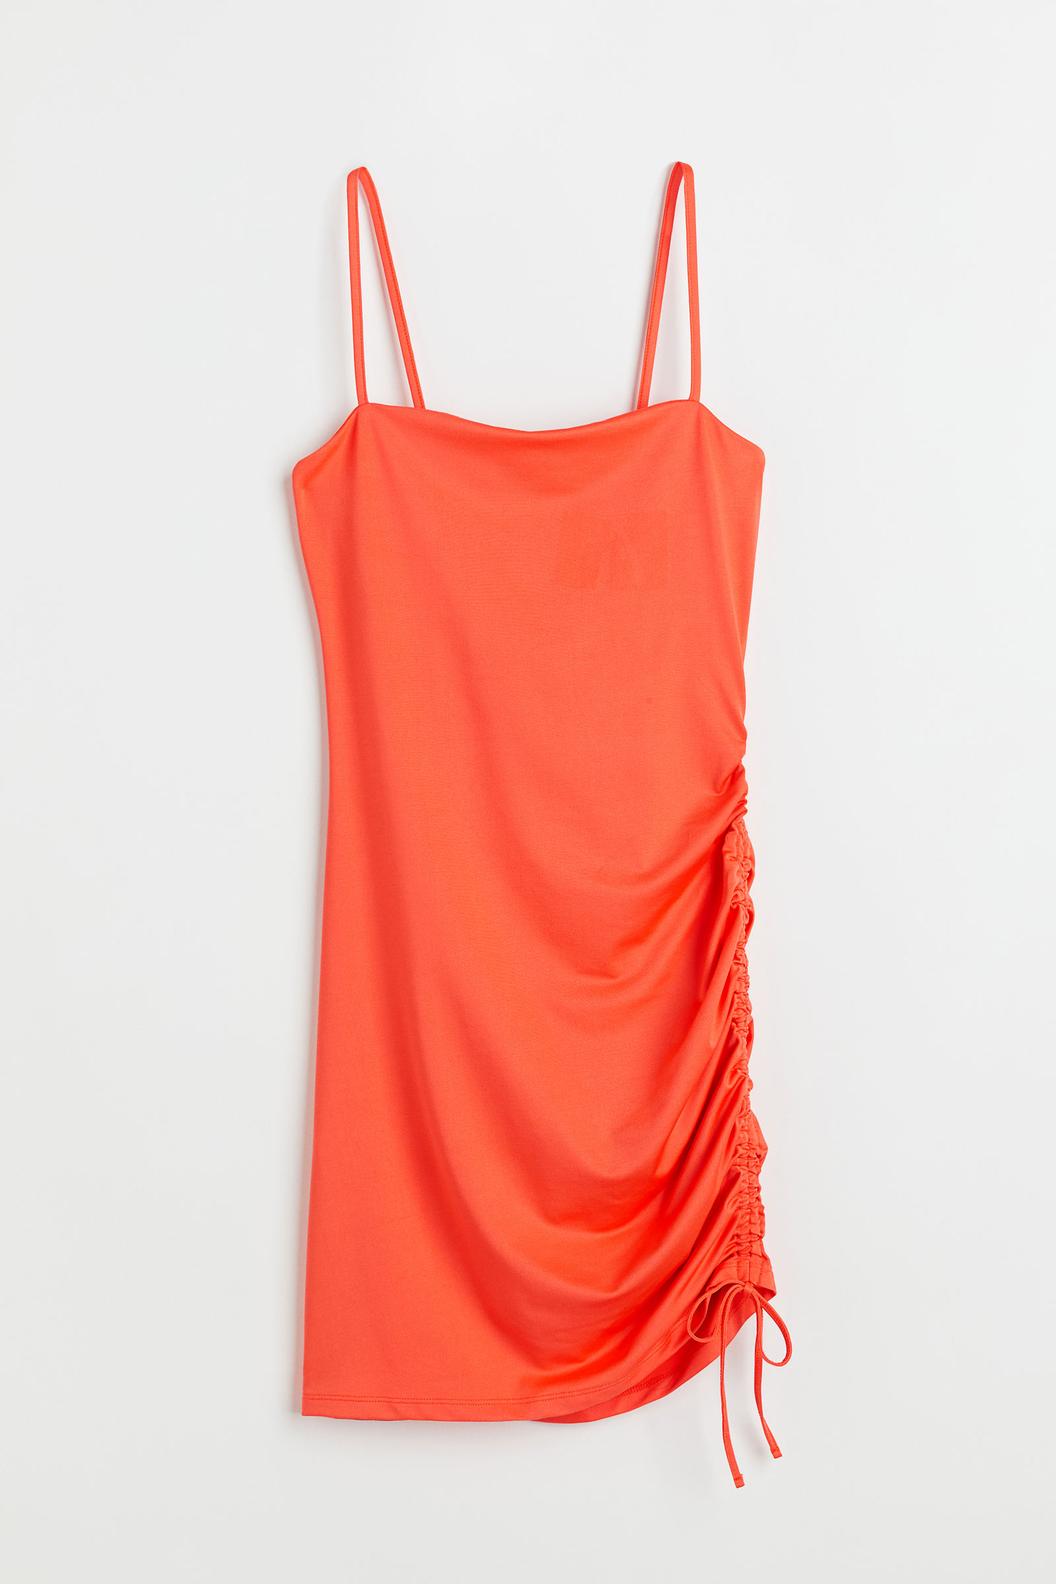 Oferta de Vestido lencero drapeado por $6000 en H&M